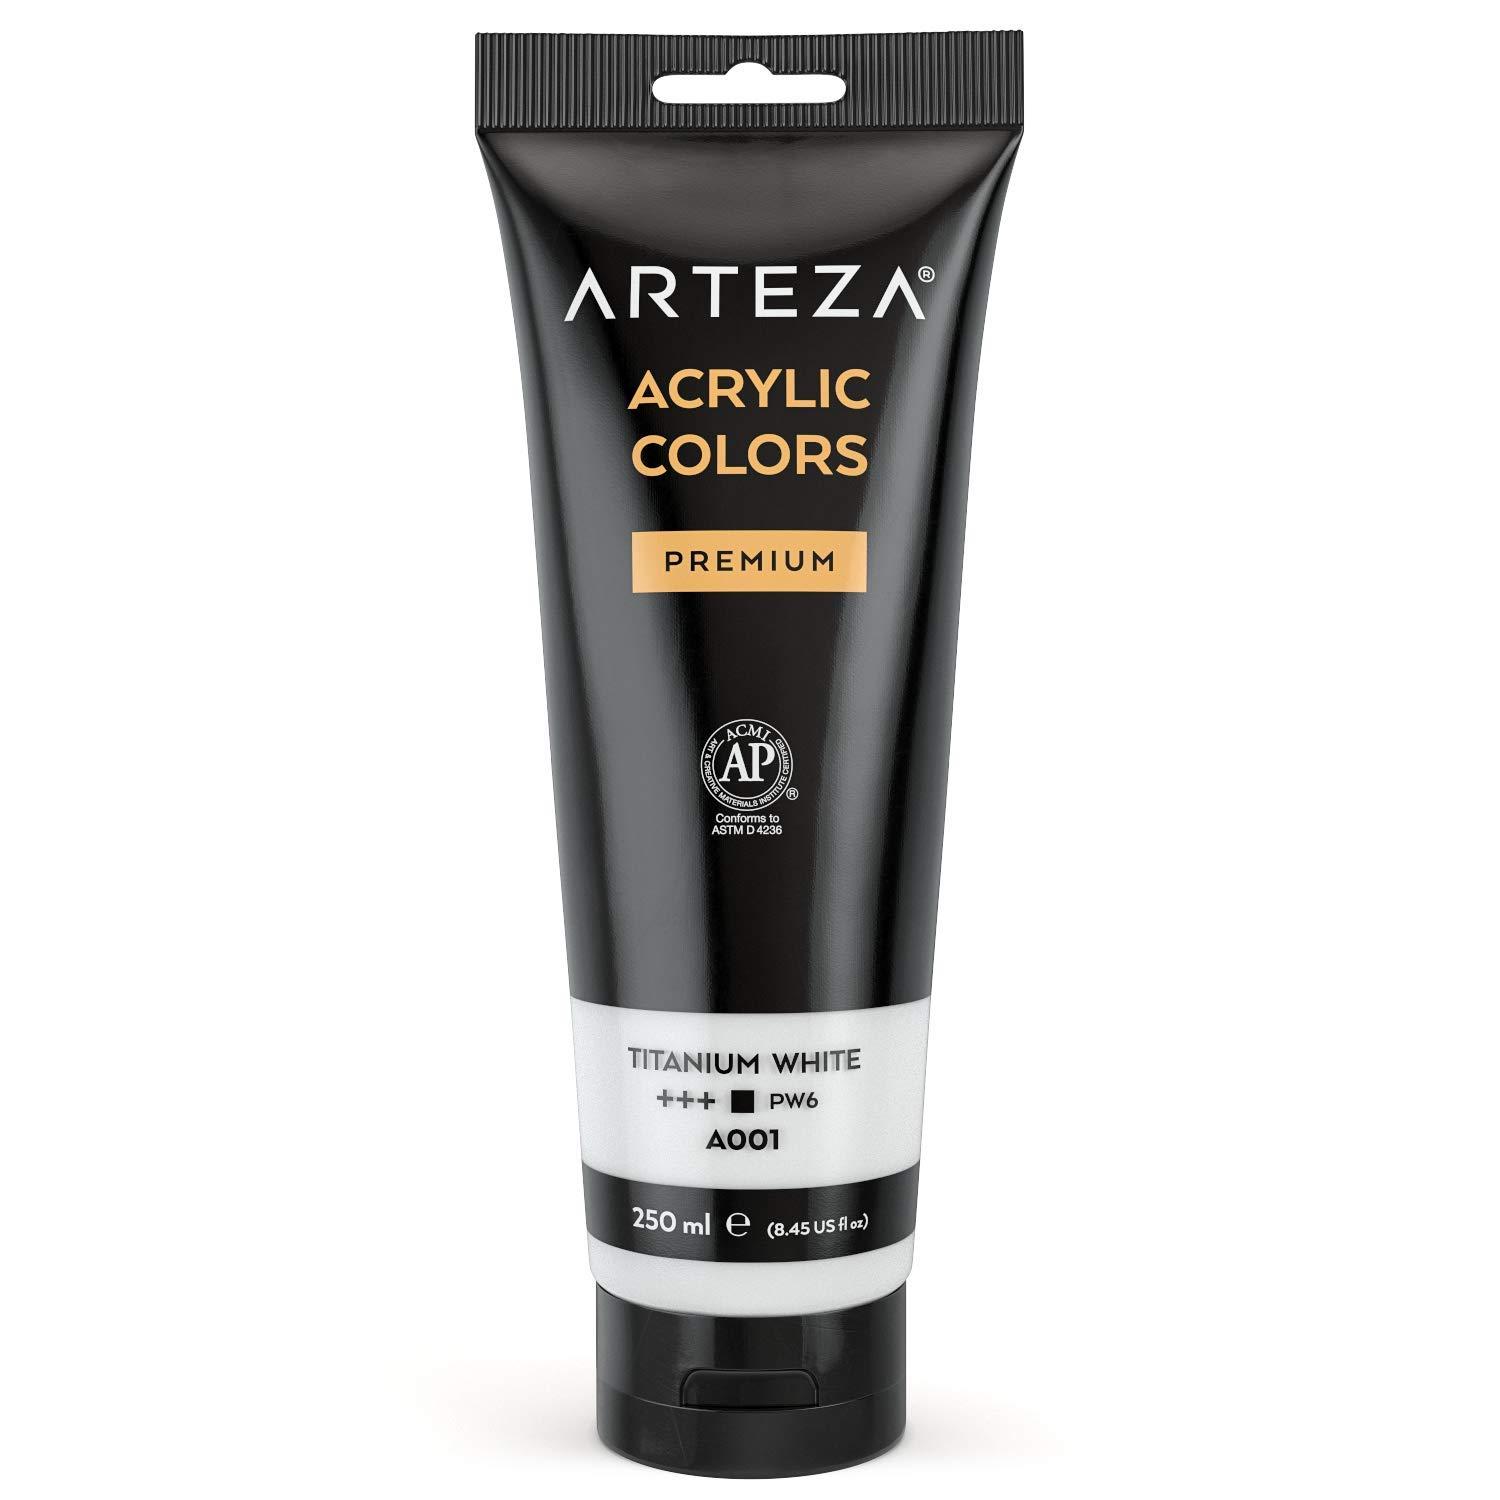 ARTEZA Acrylic Paint Set of 60 Colors, 0.74 oz/22 ml Tubes, 5 Metallic  Colors, Rich Pigments, Non-Fading, Non-Toxic Paints. Art Supplies for  Painting